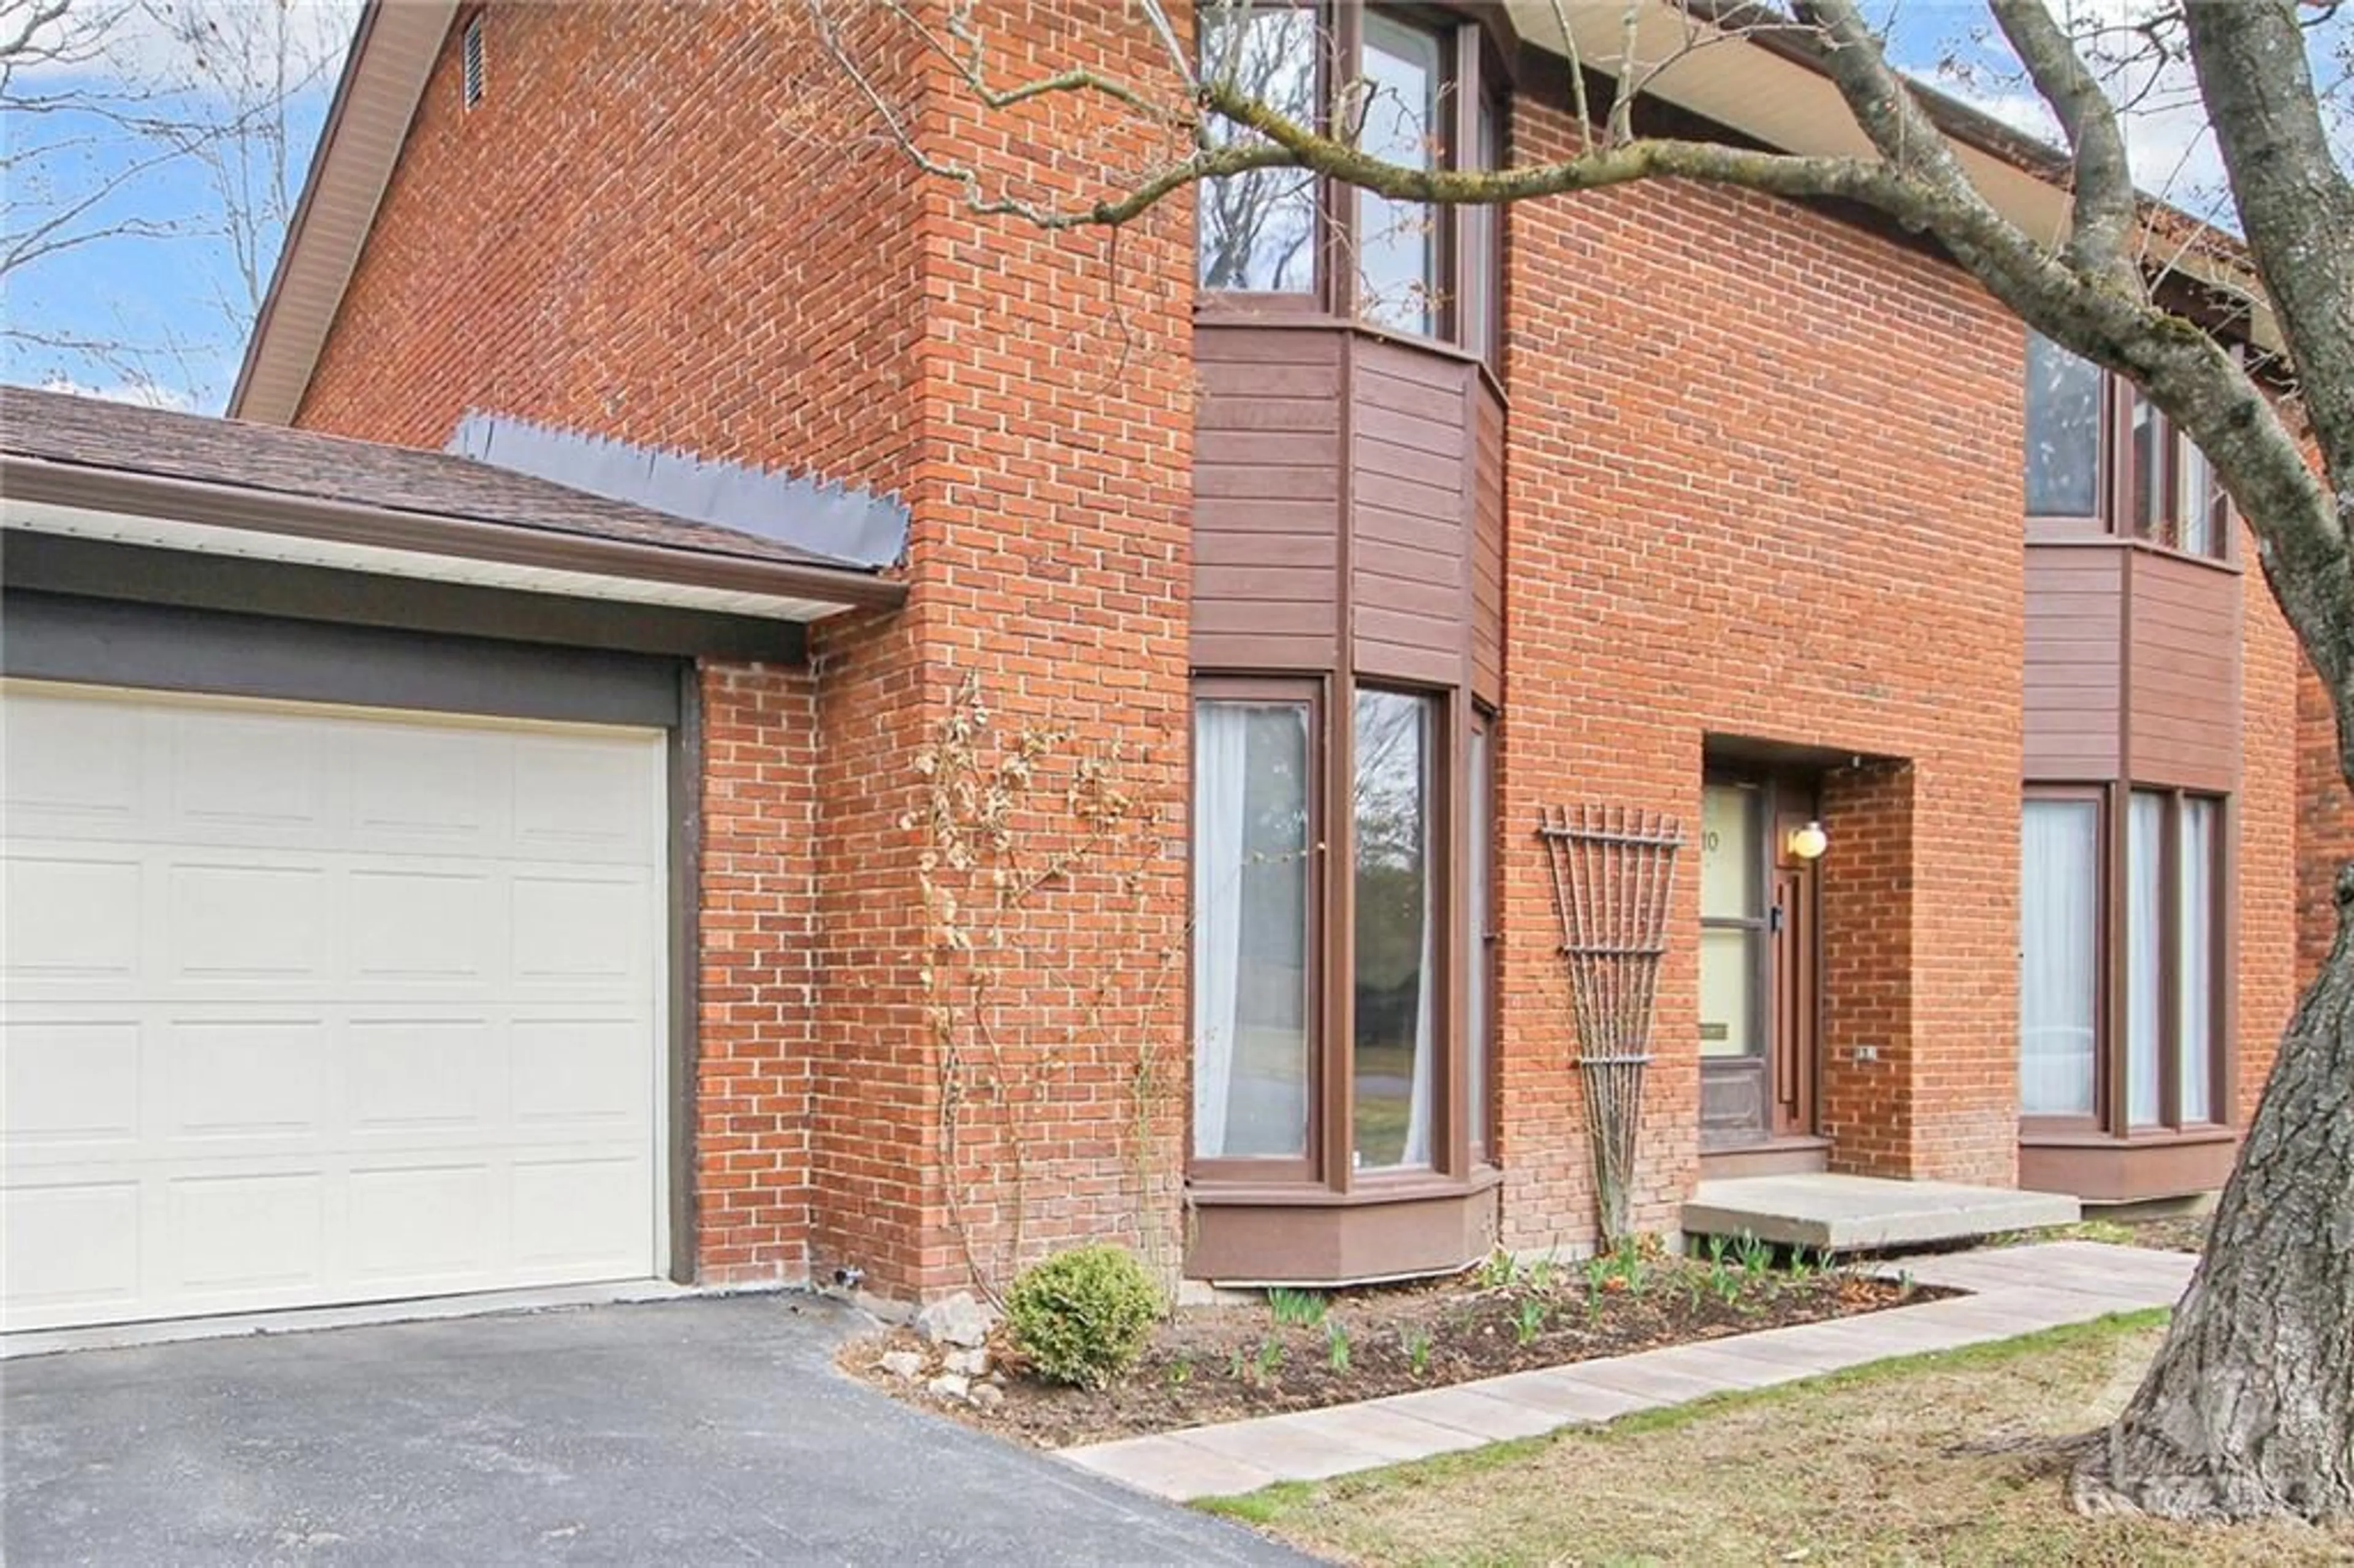 Home with brick exterior material for 10 PENTLAND Cres, Ottawa Ontario K2K 1V5